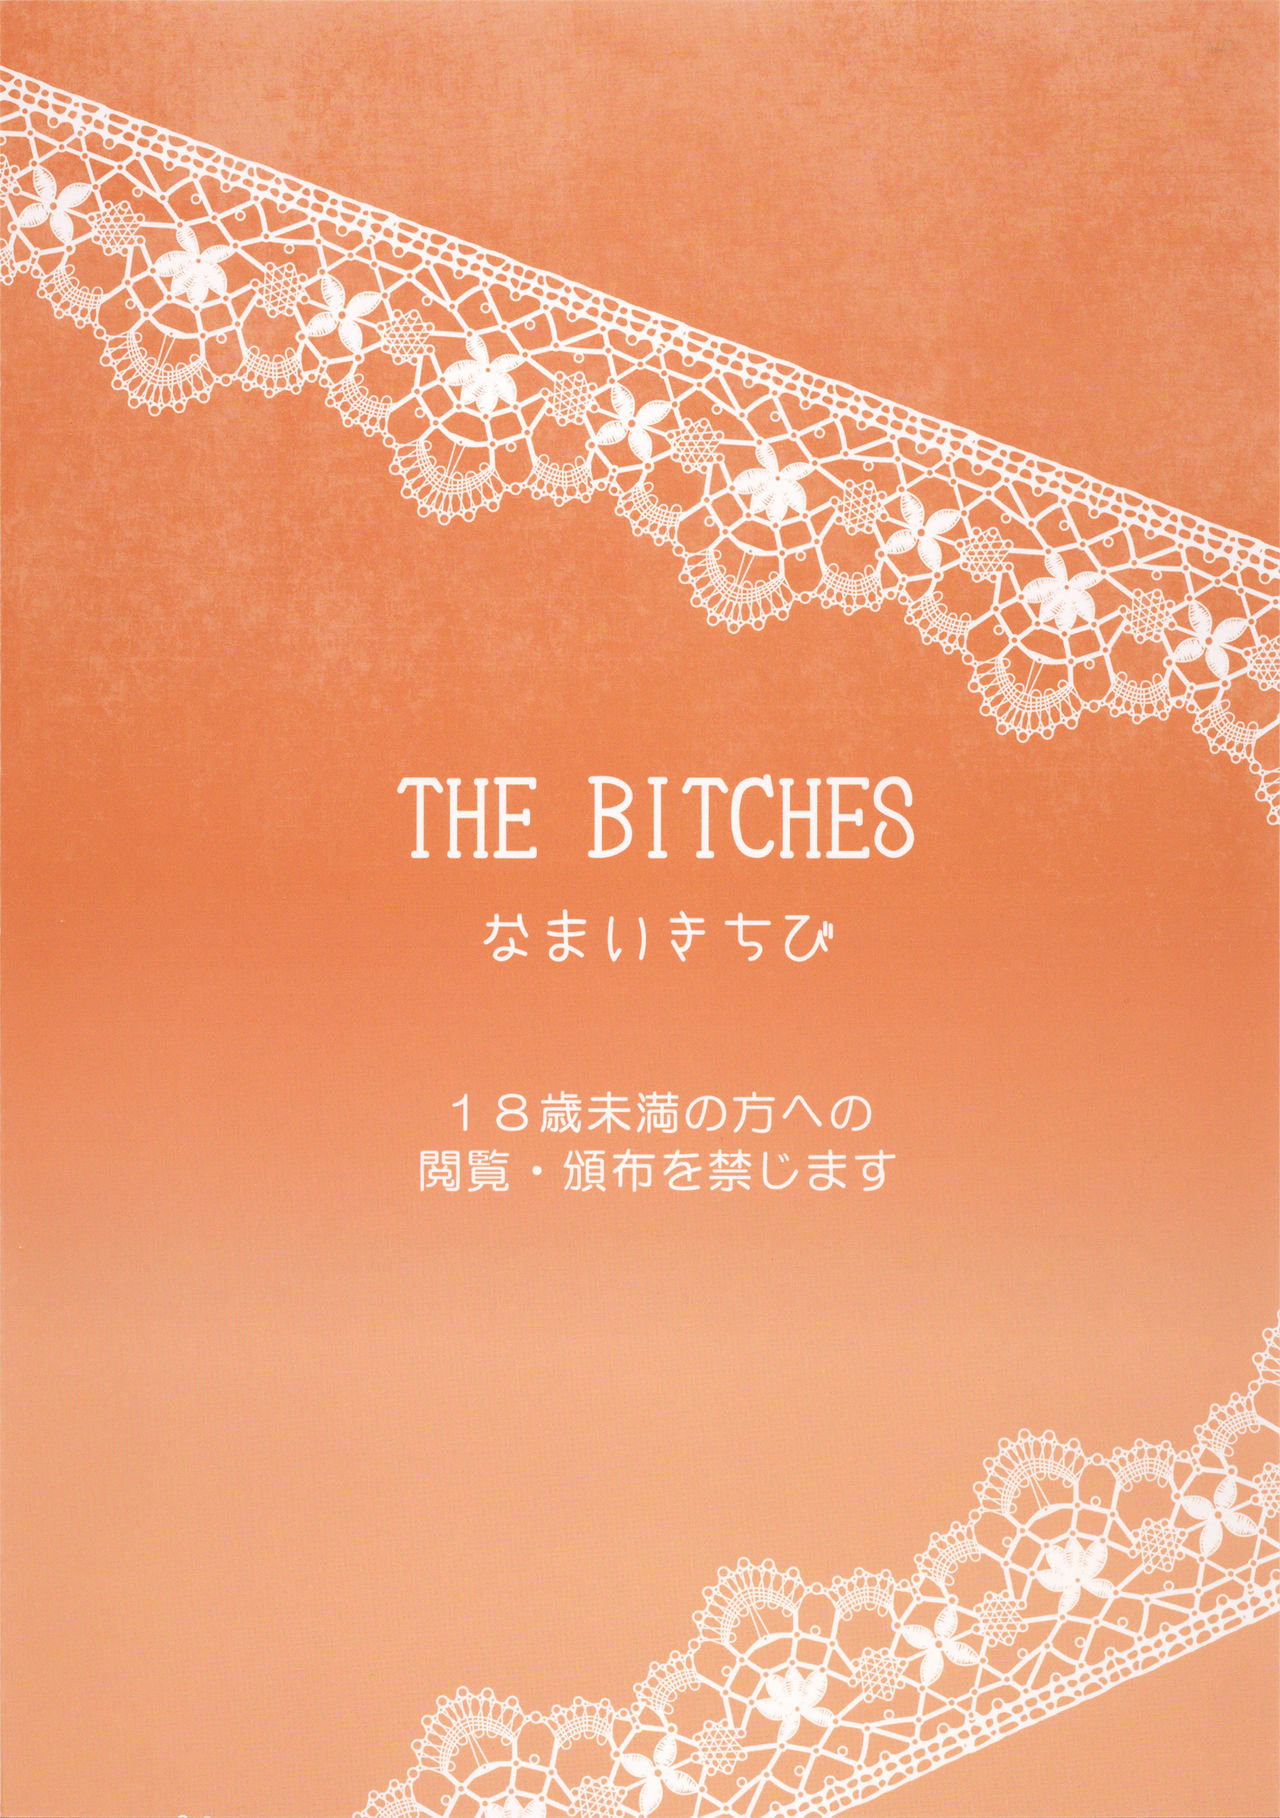 THE BITCHES 1 - Sayaka Kitami - 29